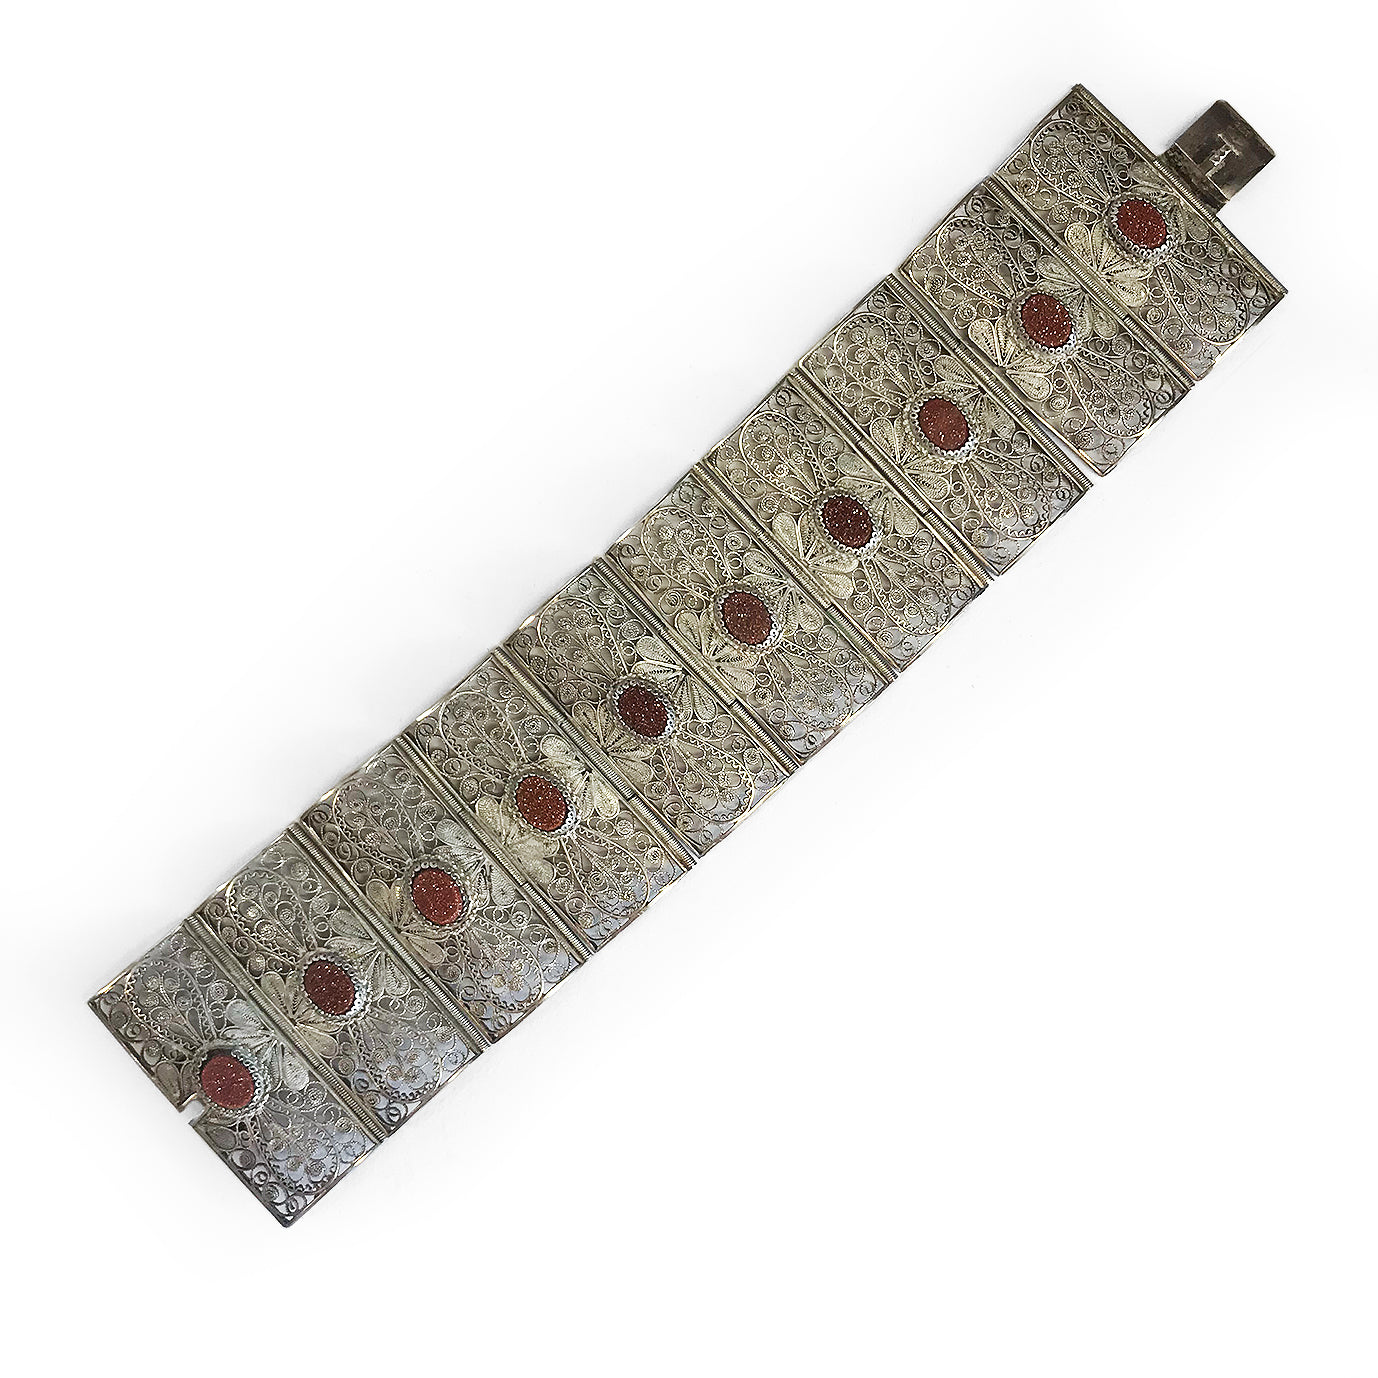 Vintage silver filigree cuff/bracelet - SHOP NOW - www.intovintage.co.uk